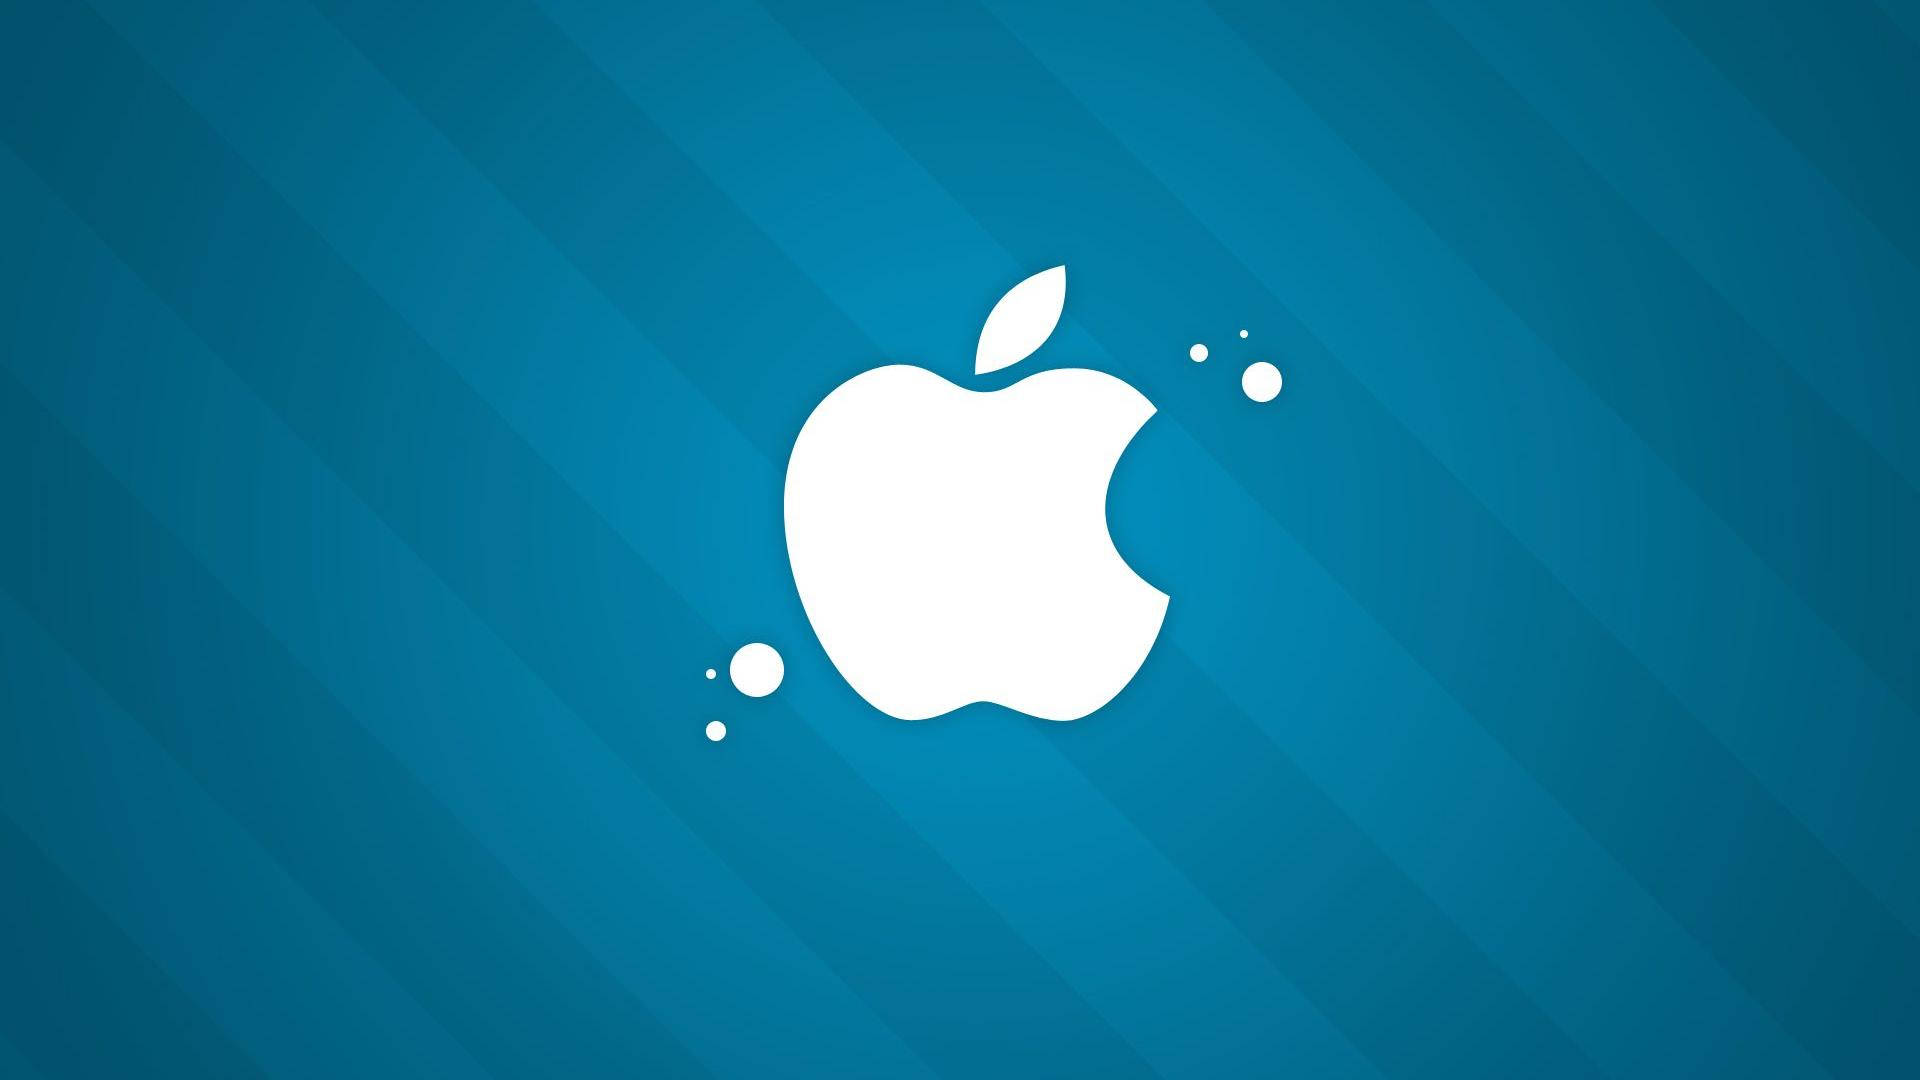 Apple Logo 4k On Blue Background Background